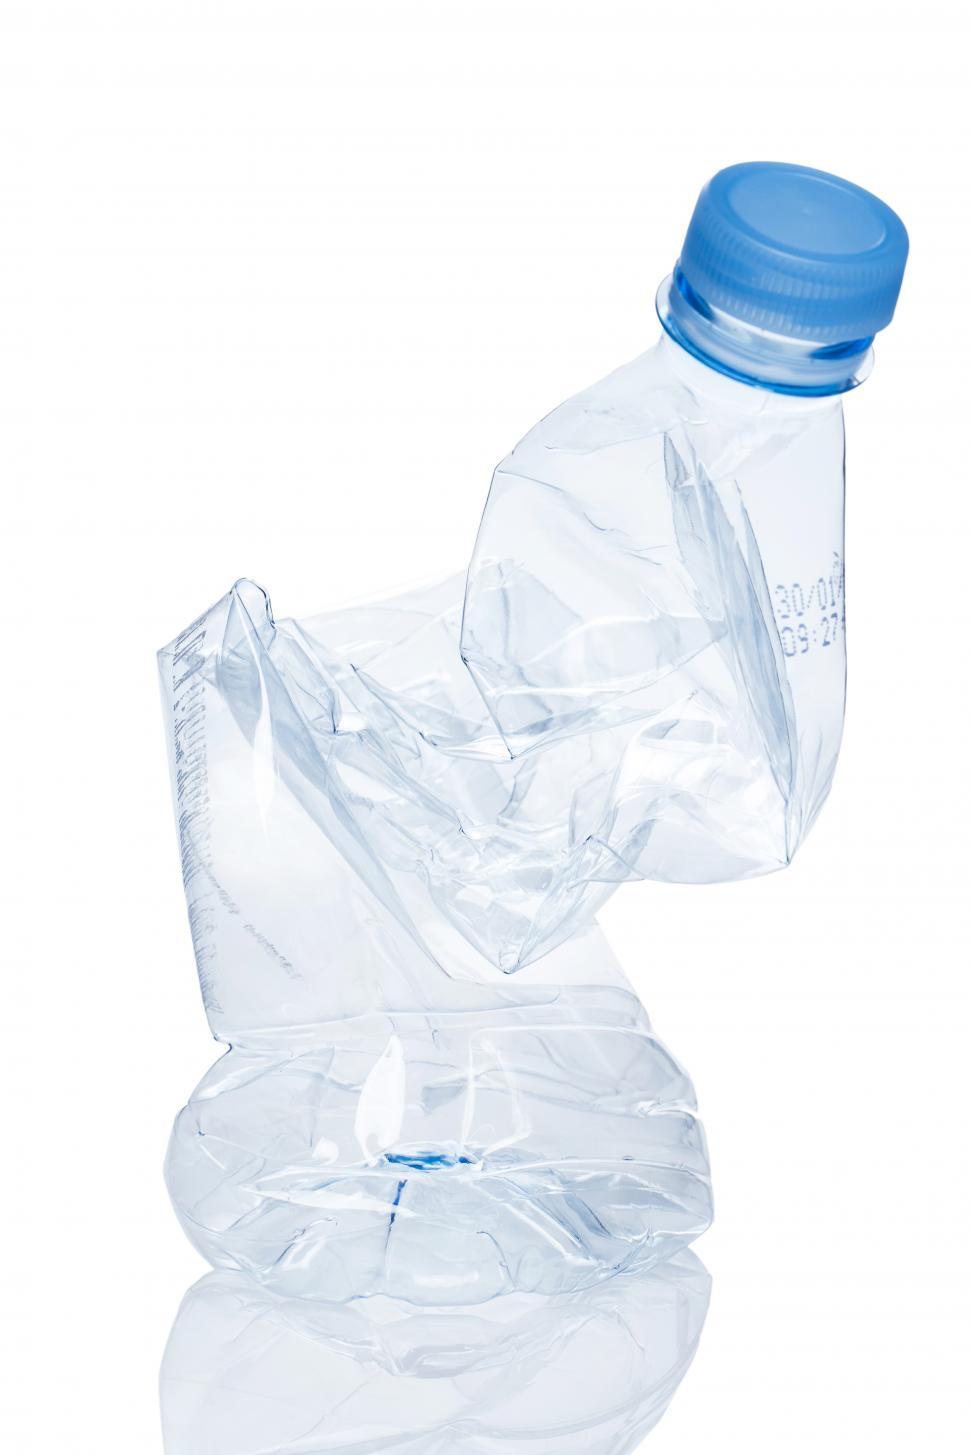 https://freerangestock.com/sample/138666/utilization.-one-empty-plastic-water-bottle.jpg